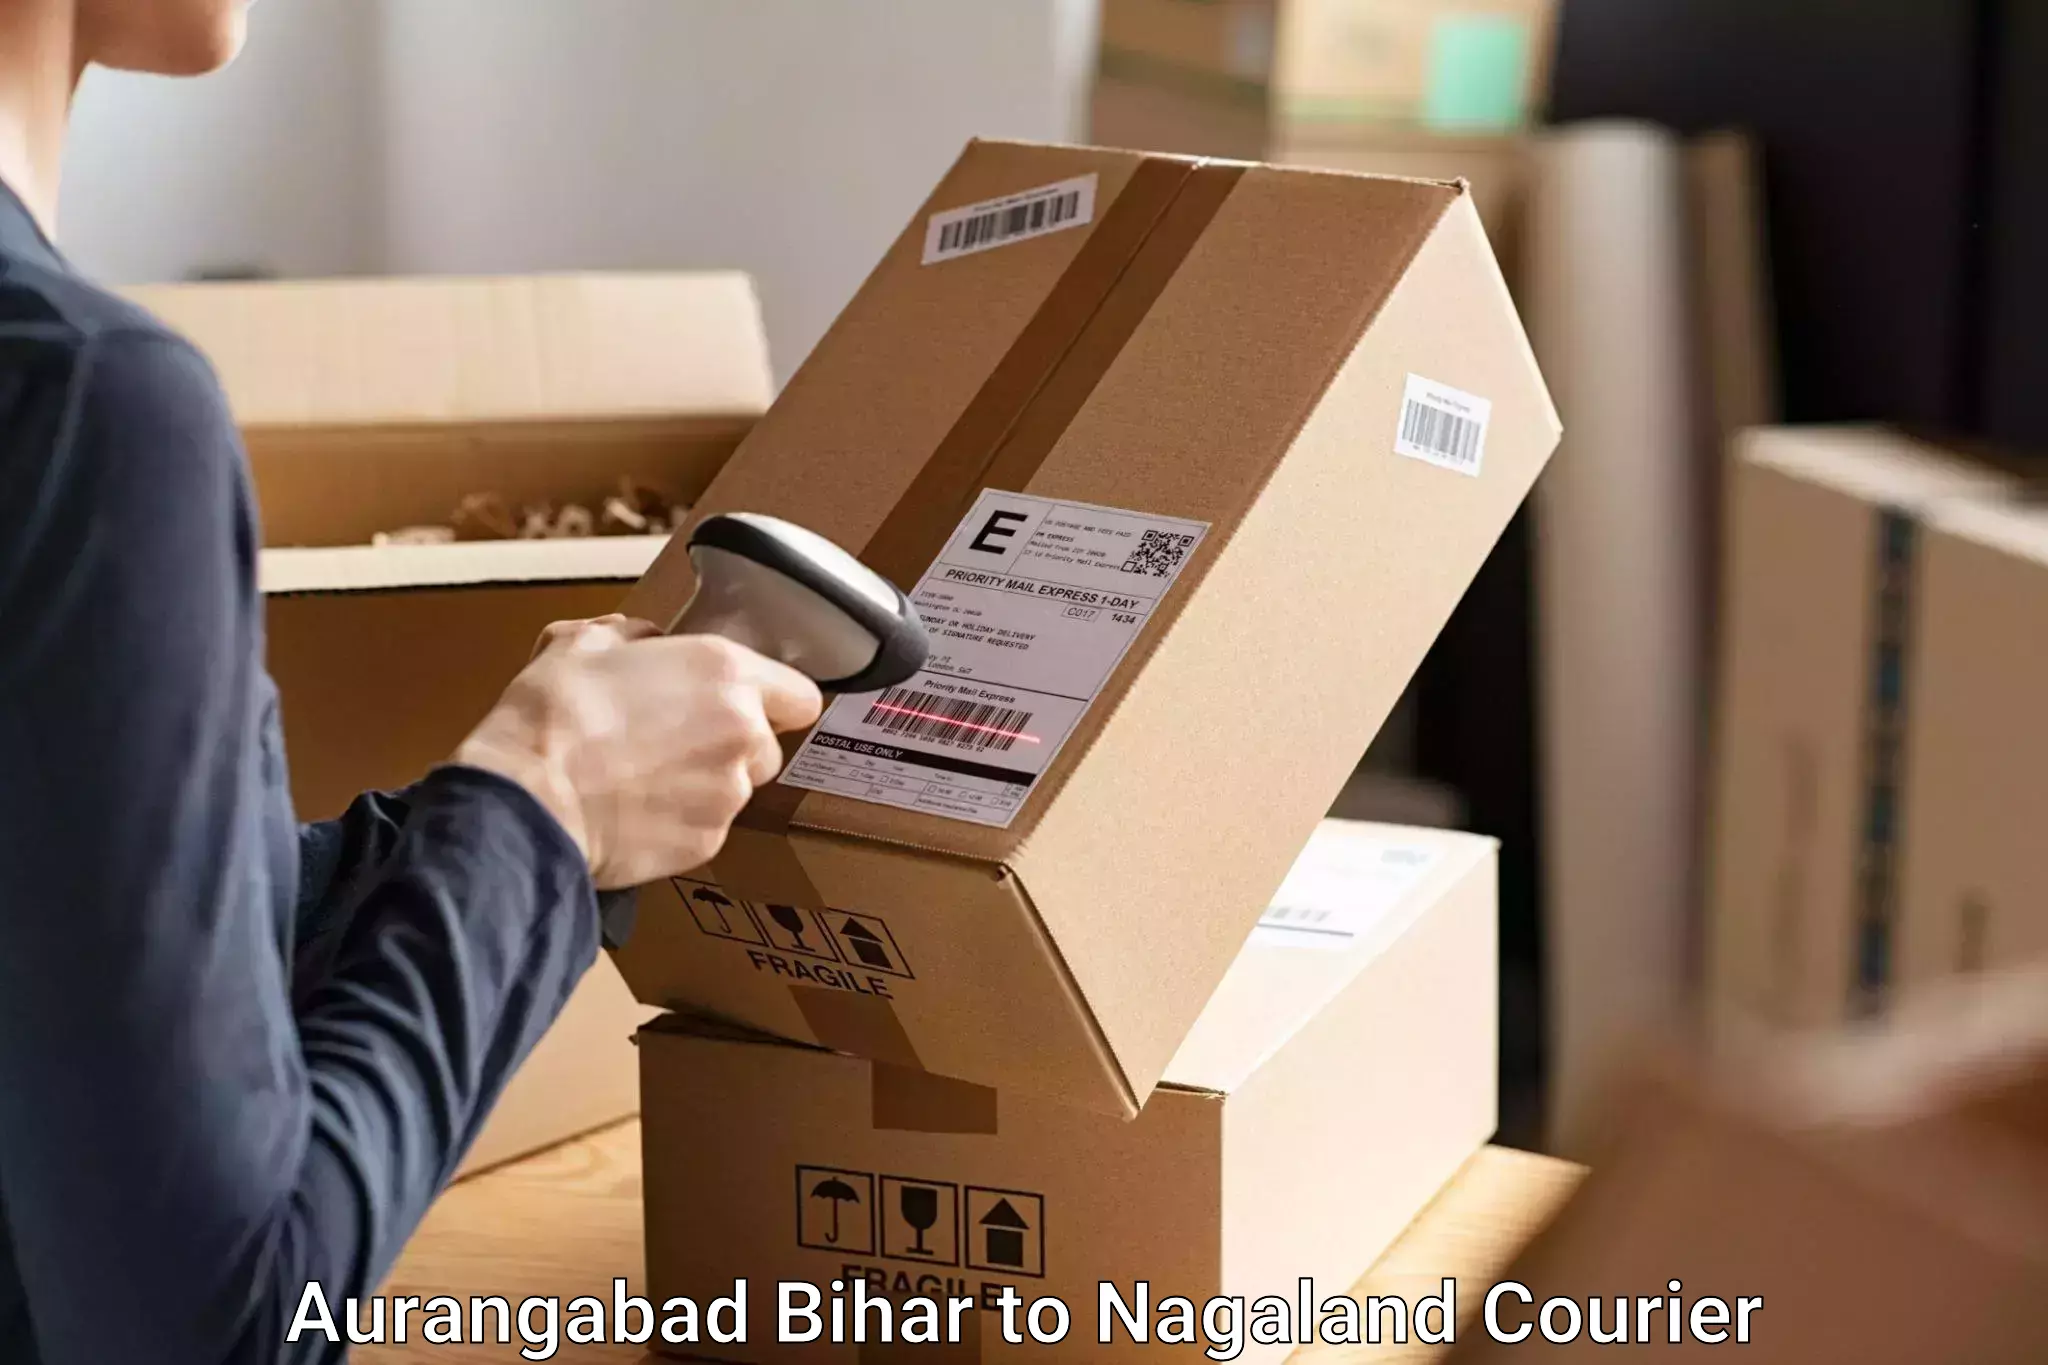 Luggage shipping specialists Aurangabad Bihar to Dimapur